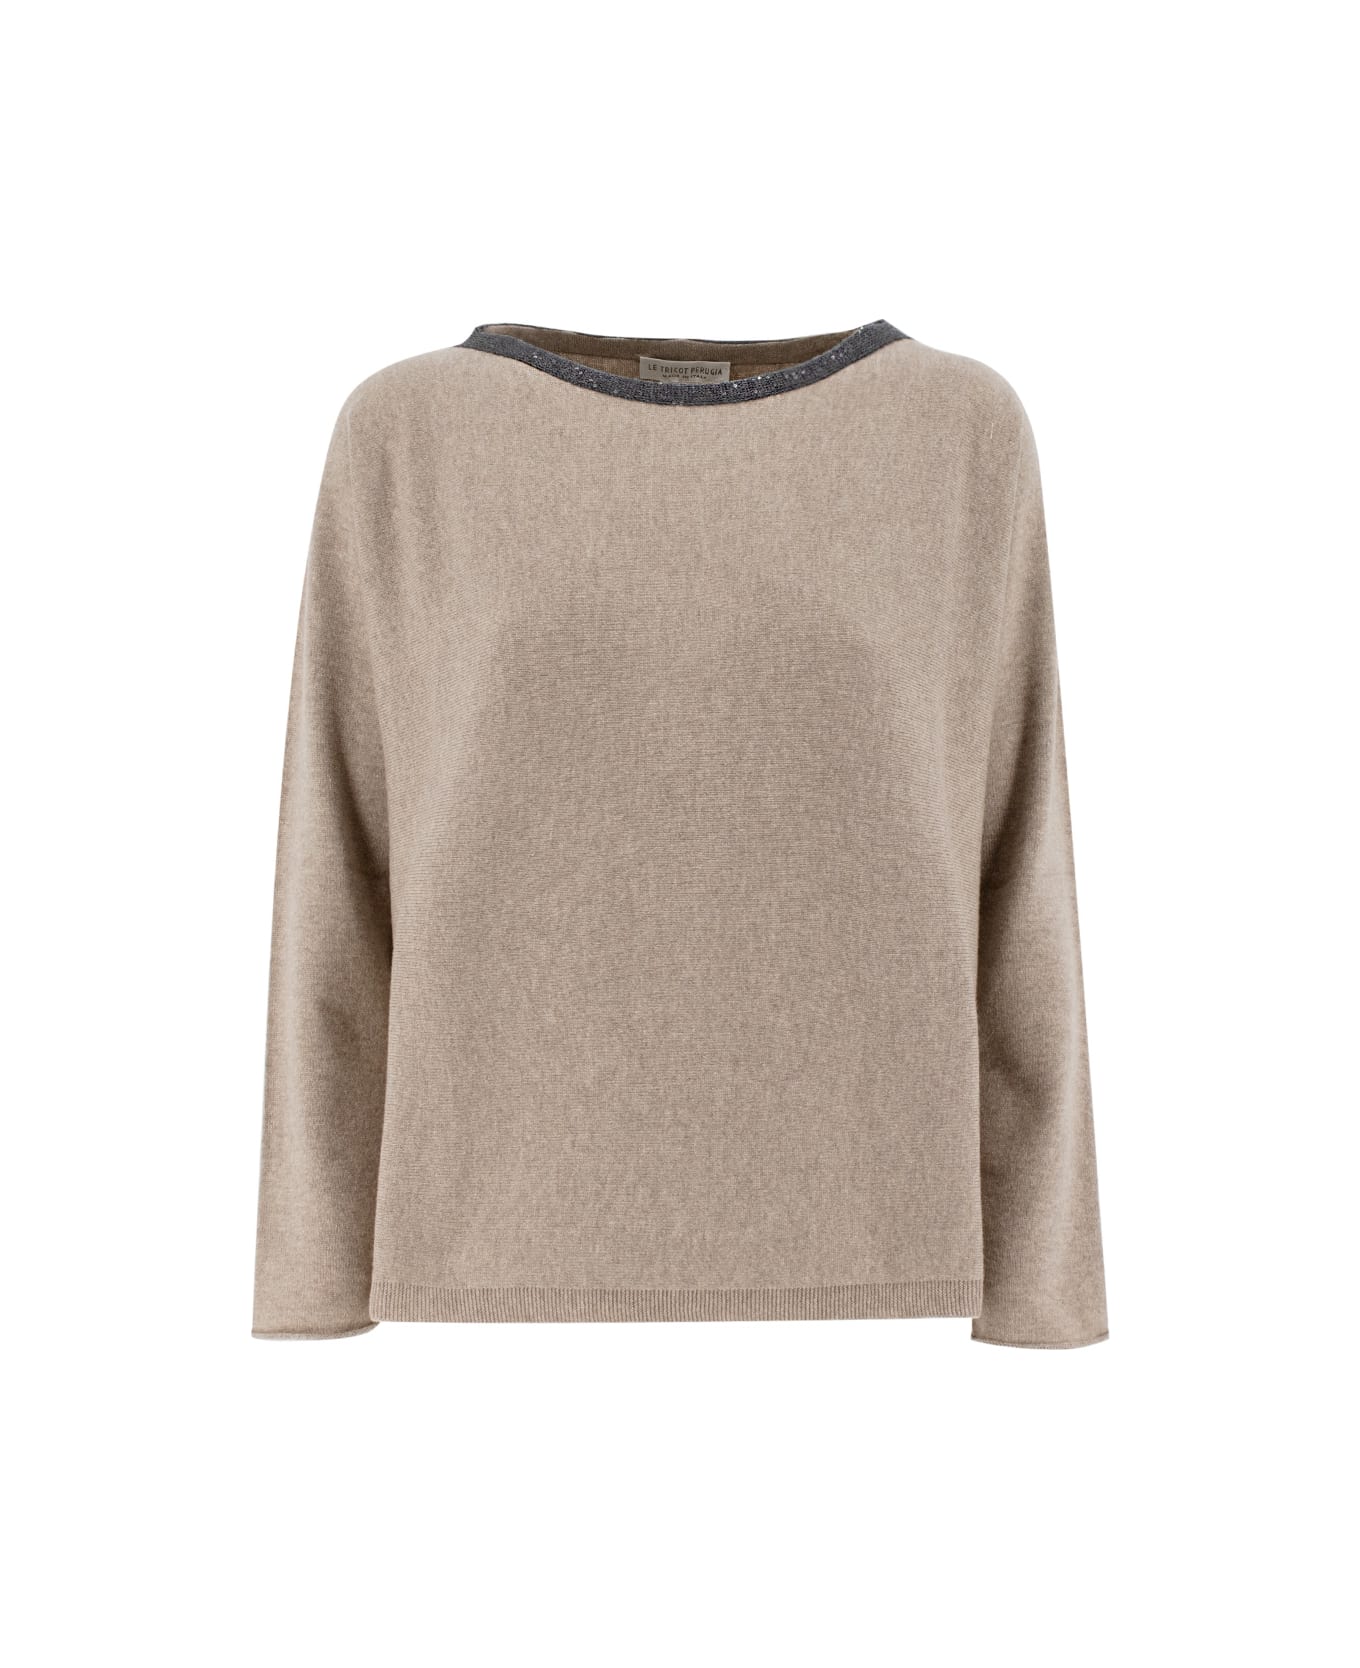 Le Tricot Perugia Sweater - D.BEIGE/D.GREY